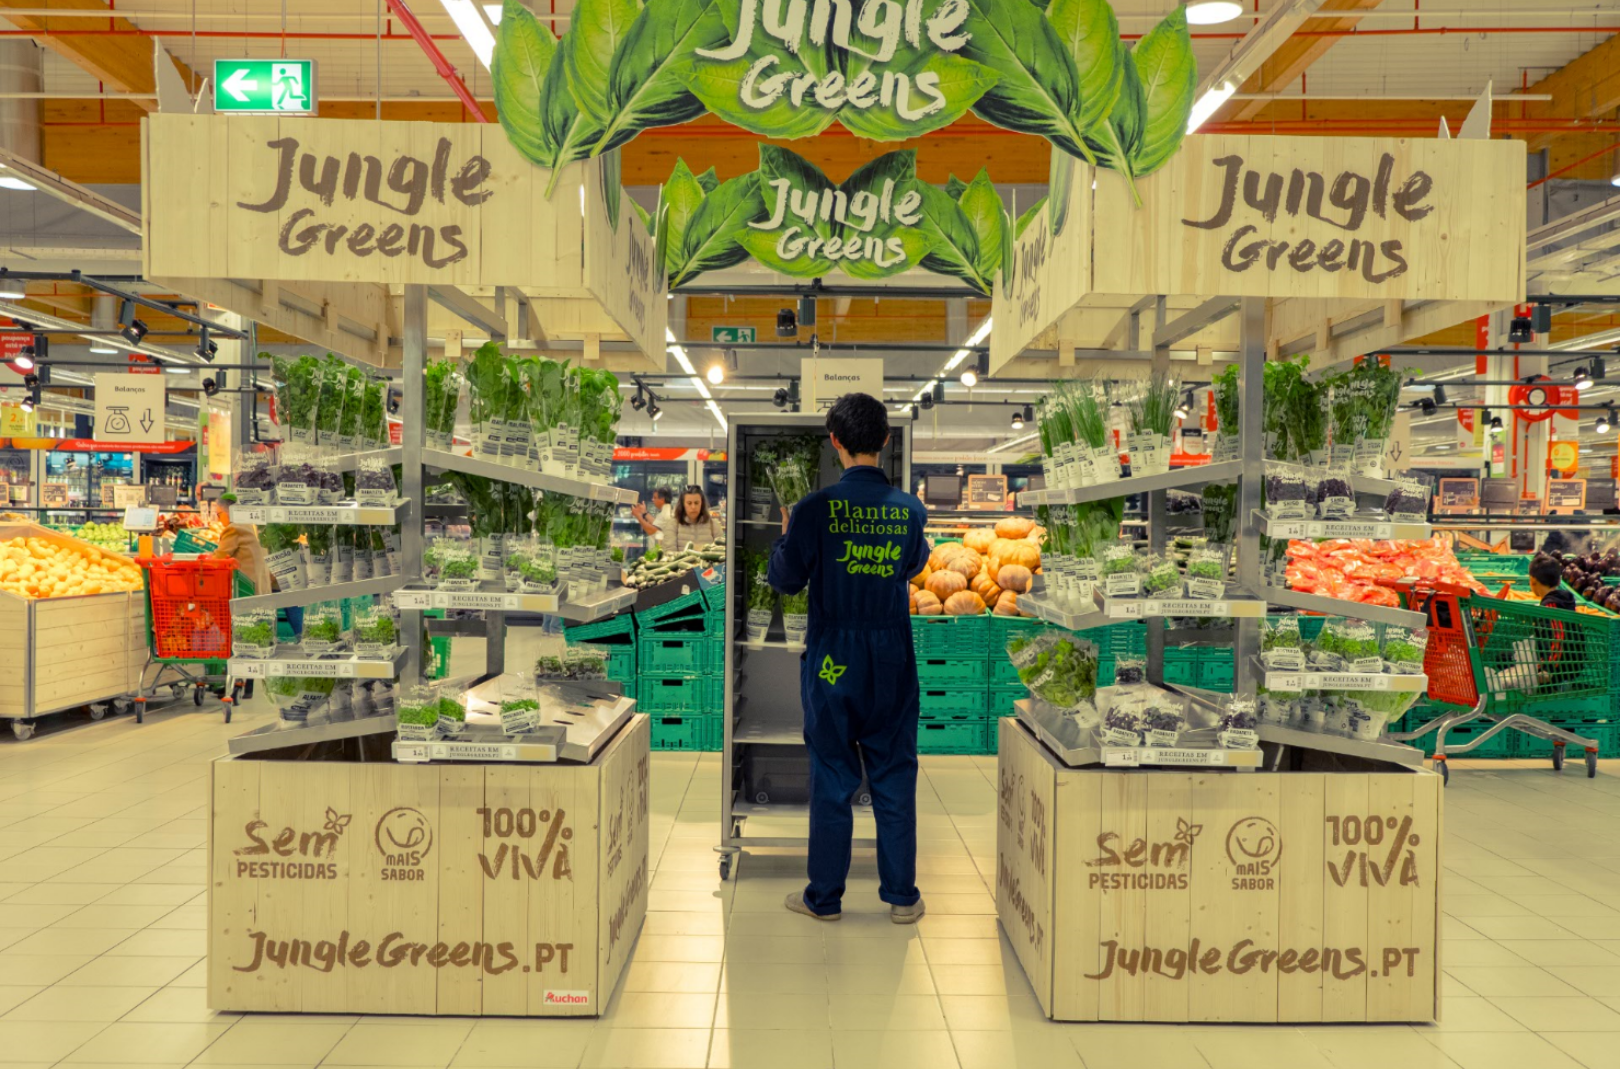 Jungle Green Live Plants 3.png